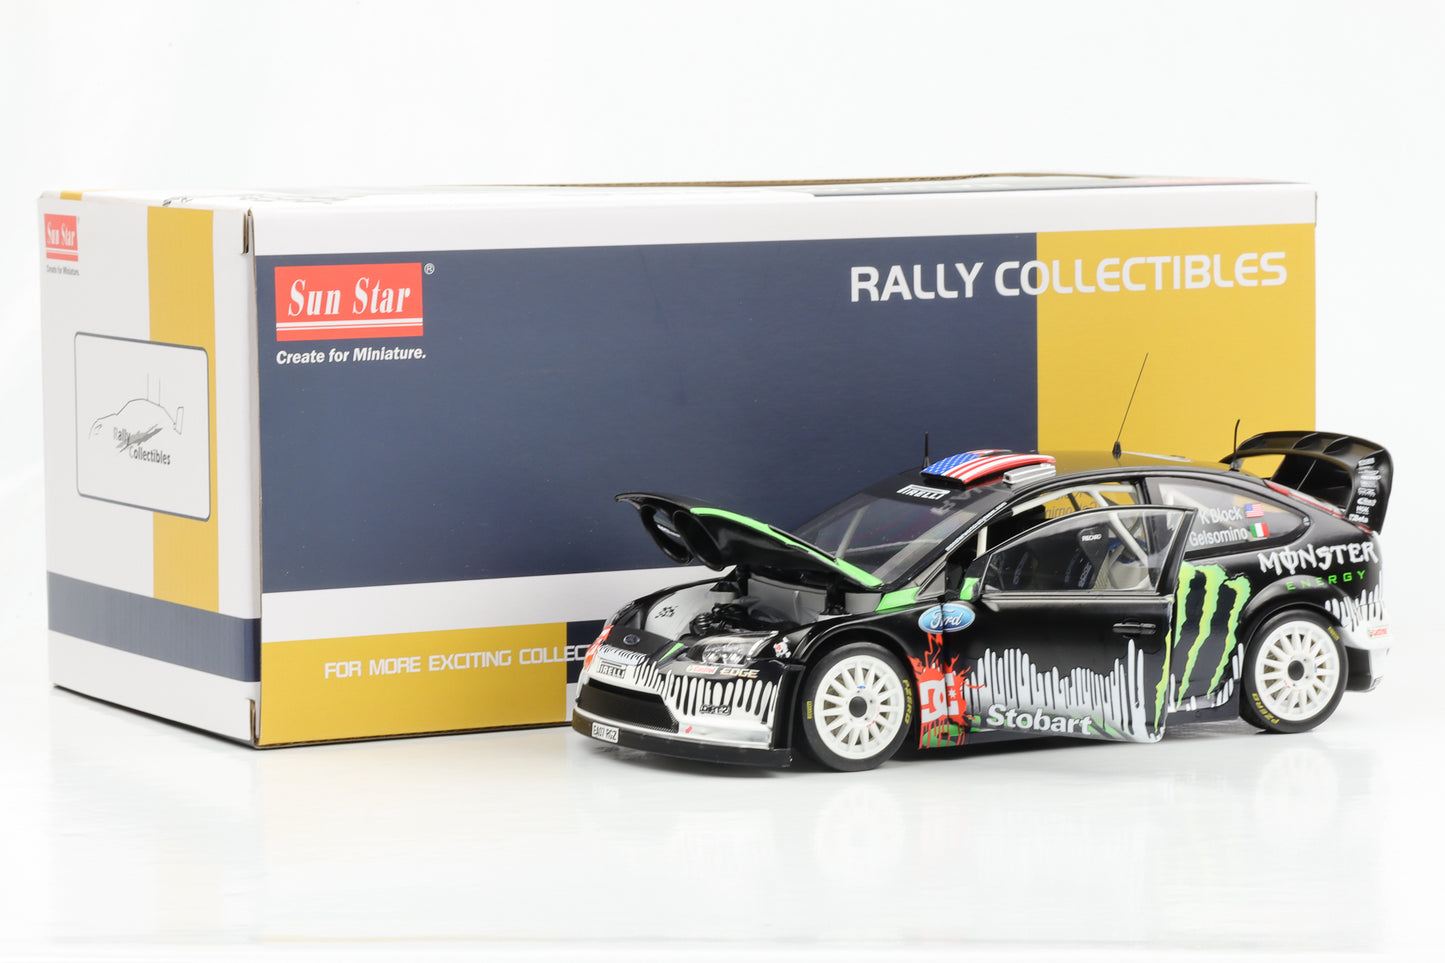 1:18 فورد فوكس RS WRC07 كين بلوك راليداي كاسل كومب حلبة صن ستار